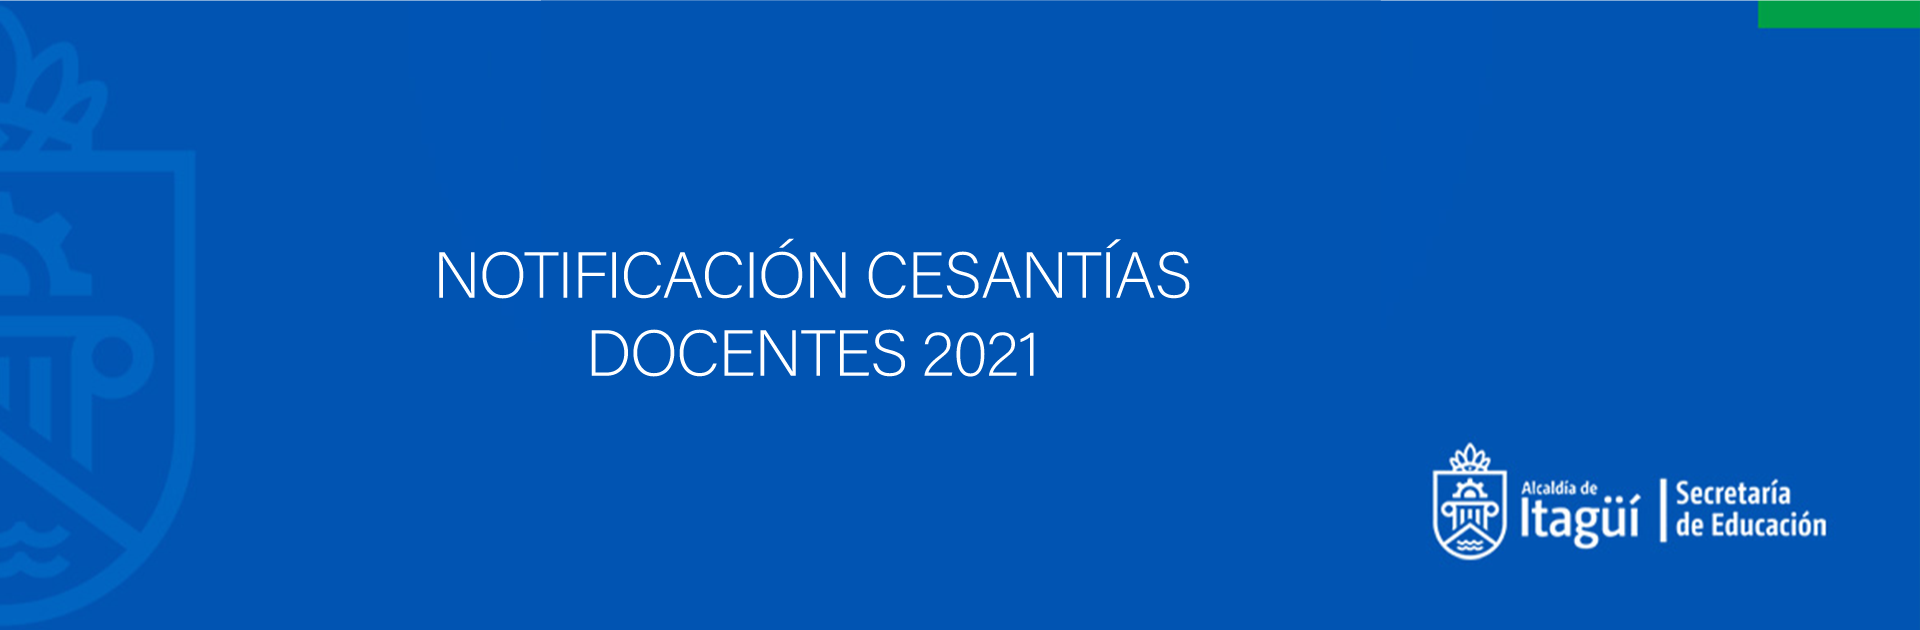 NOTIFICACIÓN CESANTÍAS DOCENTES 2021